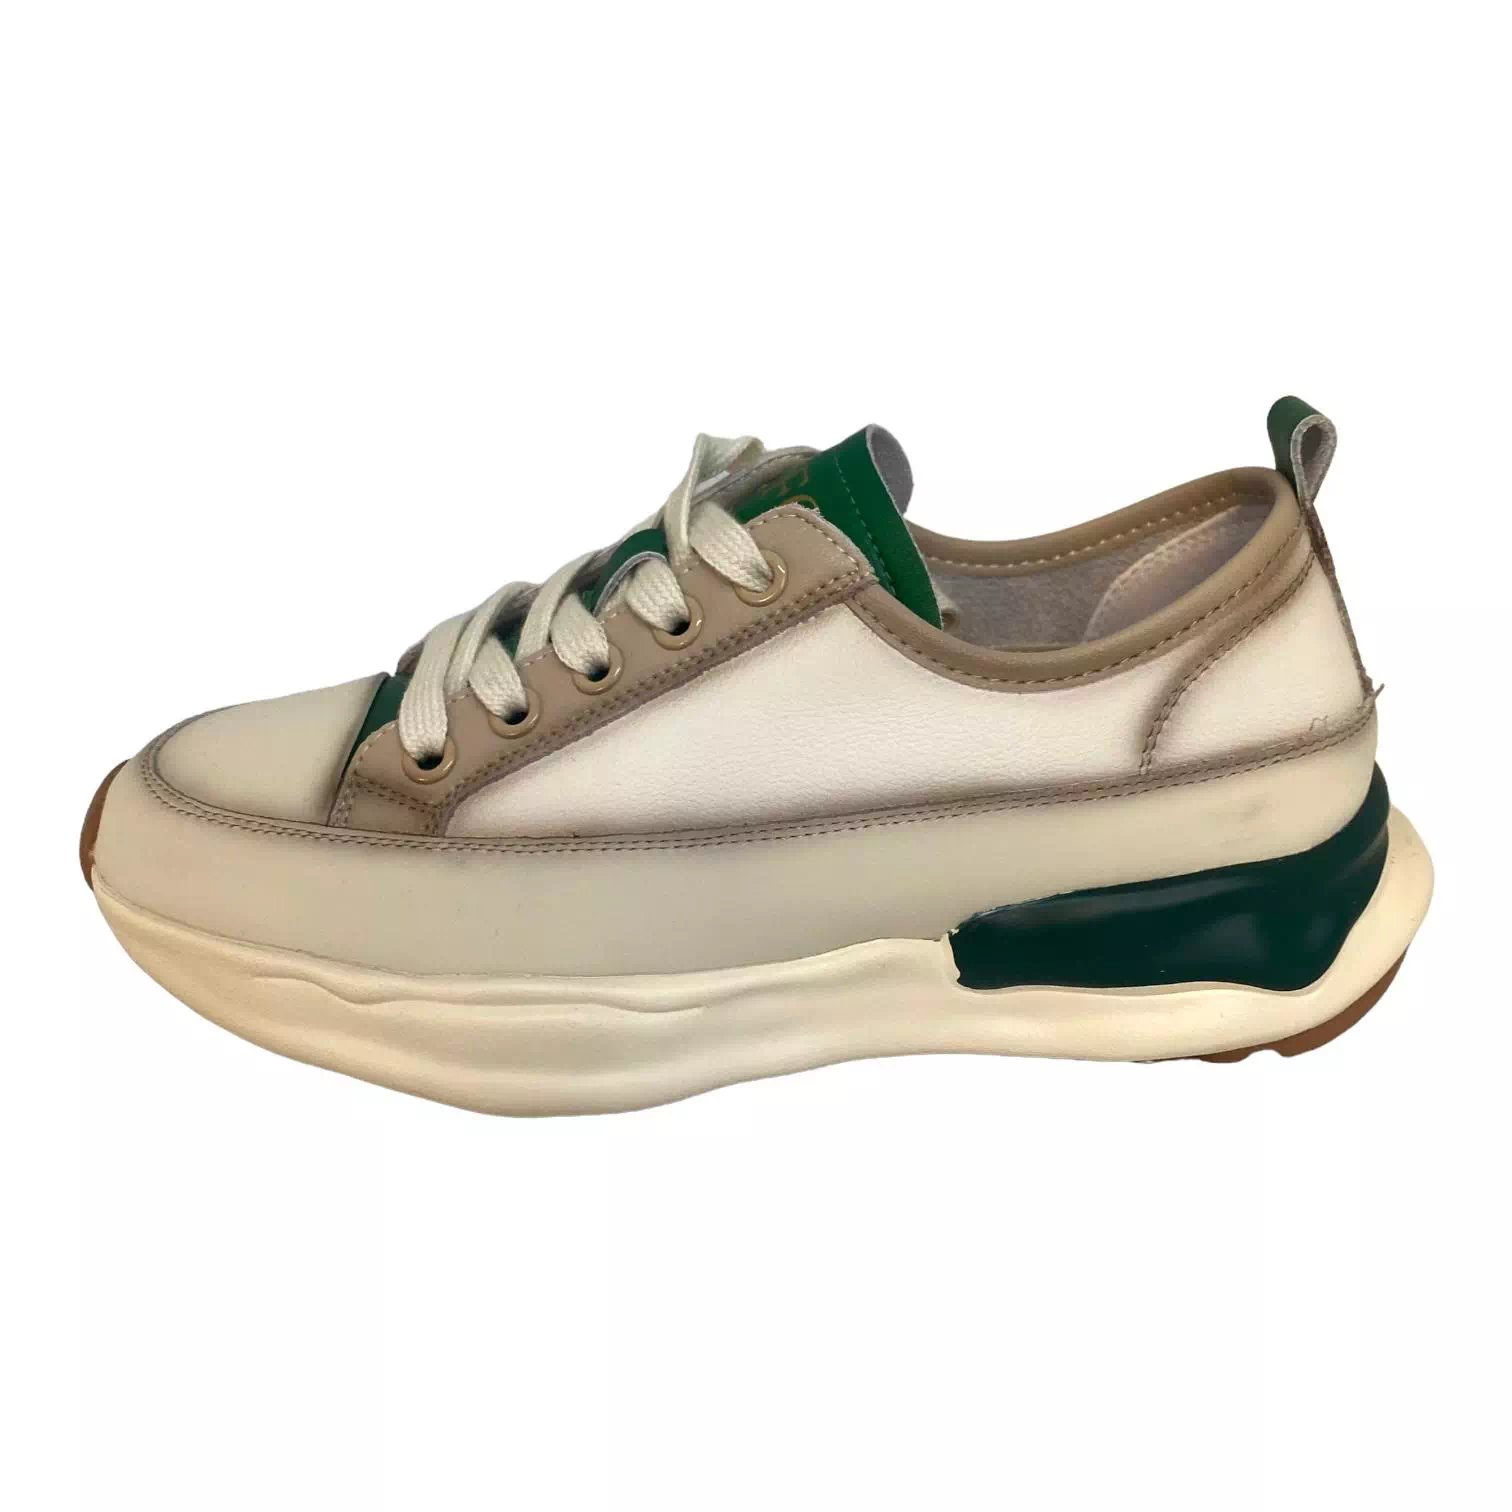 Pantofi albi cu talpa confort si detalii verzi